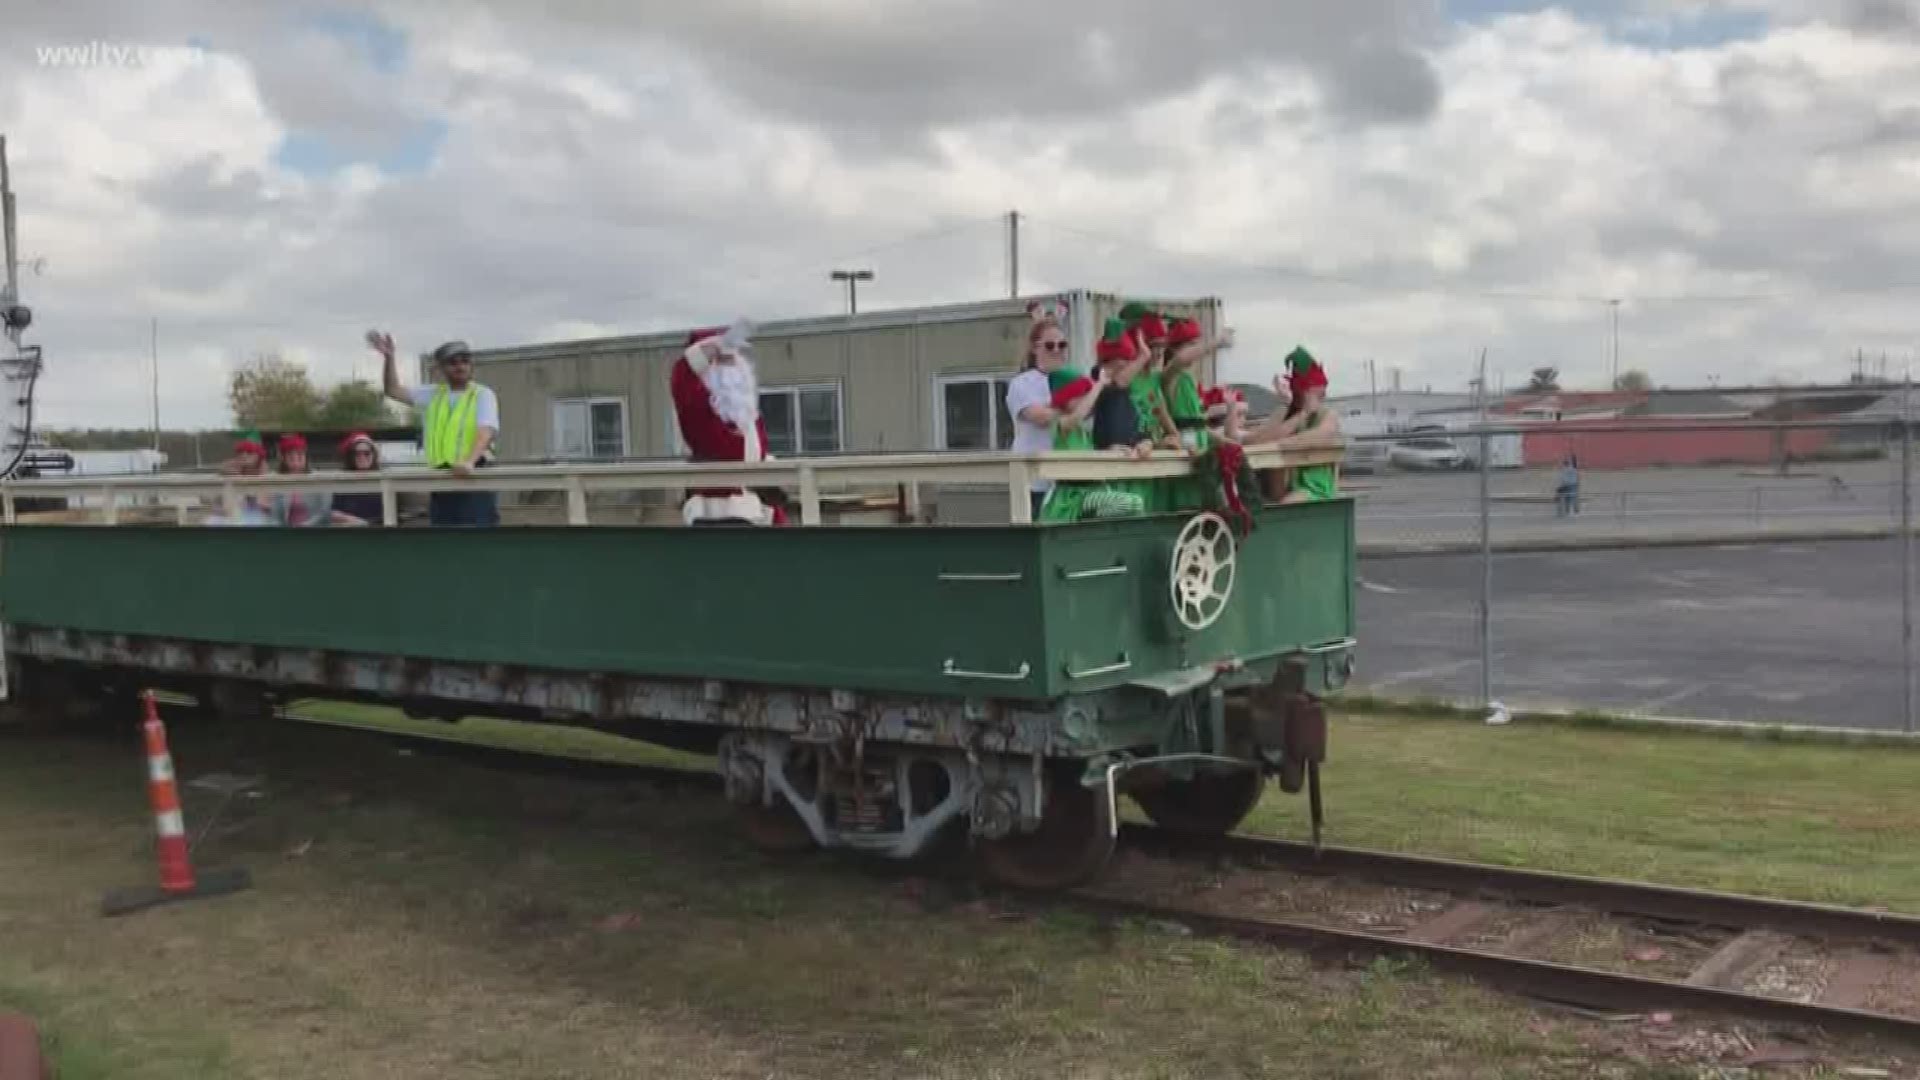 The Louisiana Steam Train Association is sponsoring Papa Noel's Holiday Train Ride on Saturday, Dec. 14. More info: LASTA.org/santa2019.